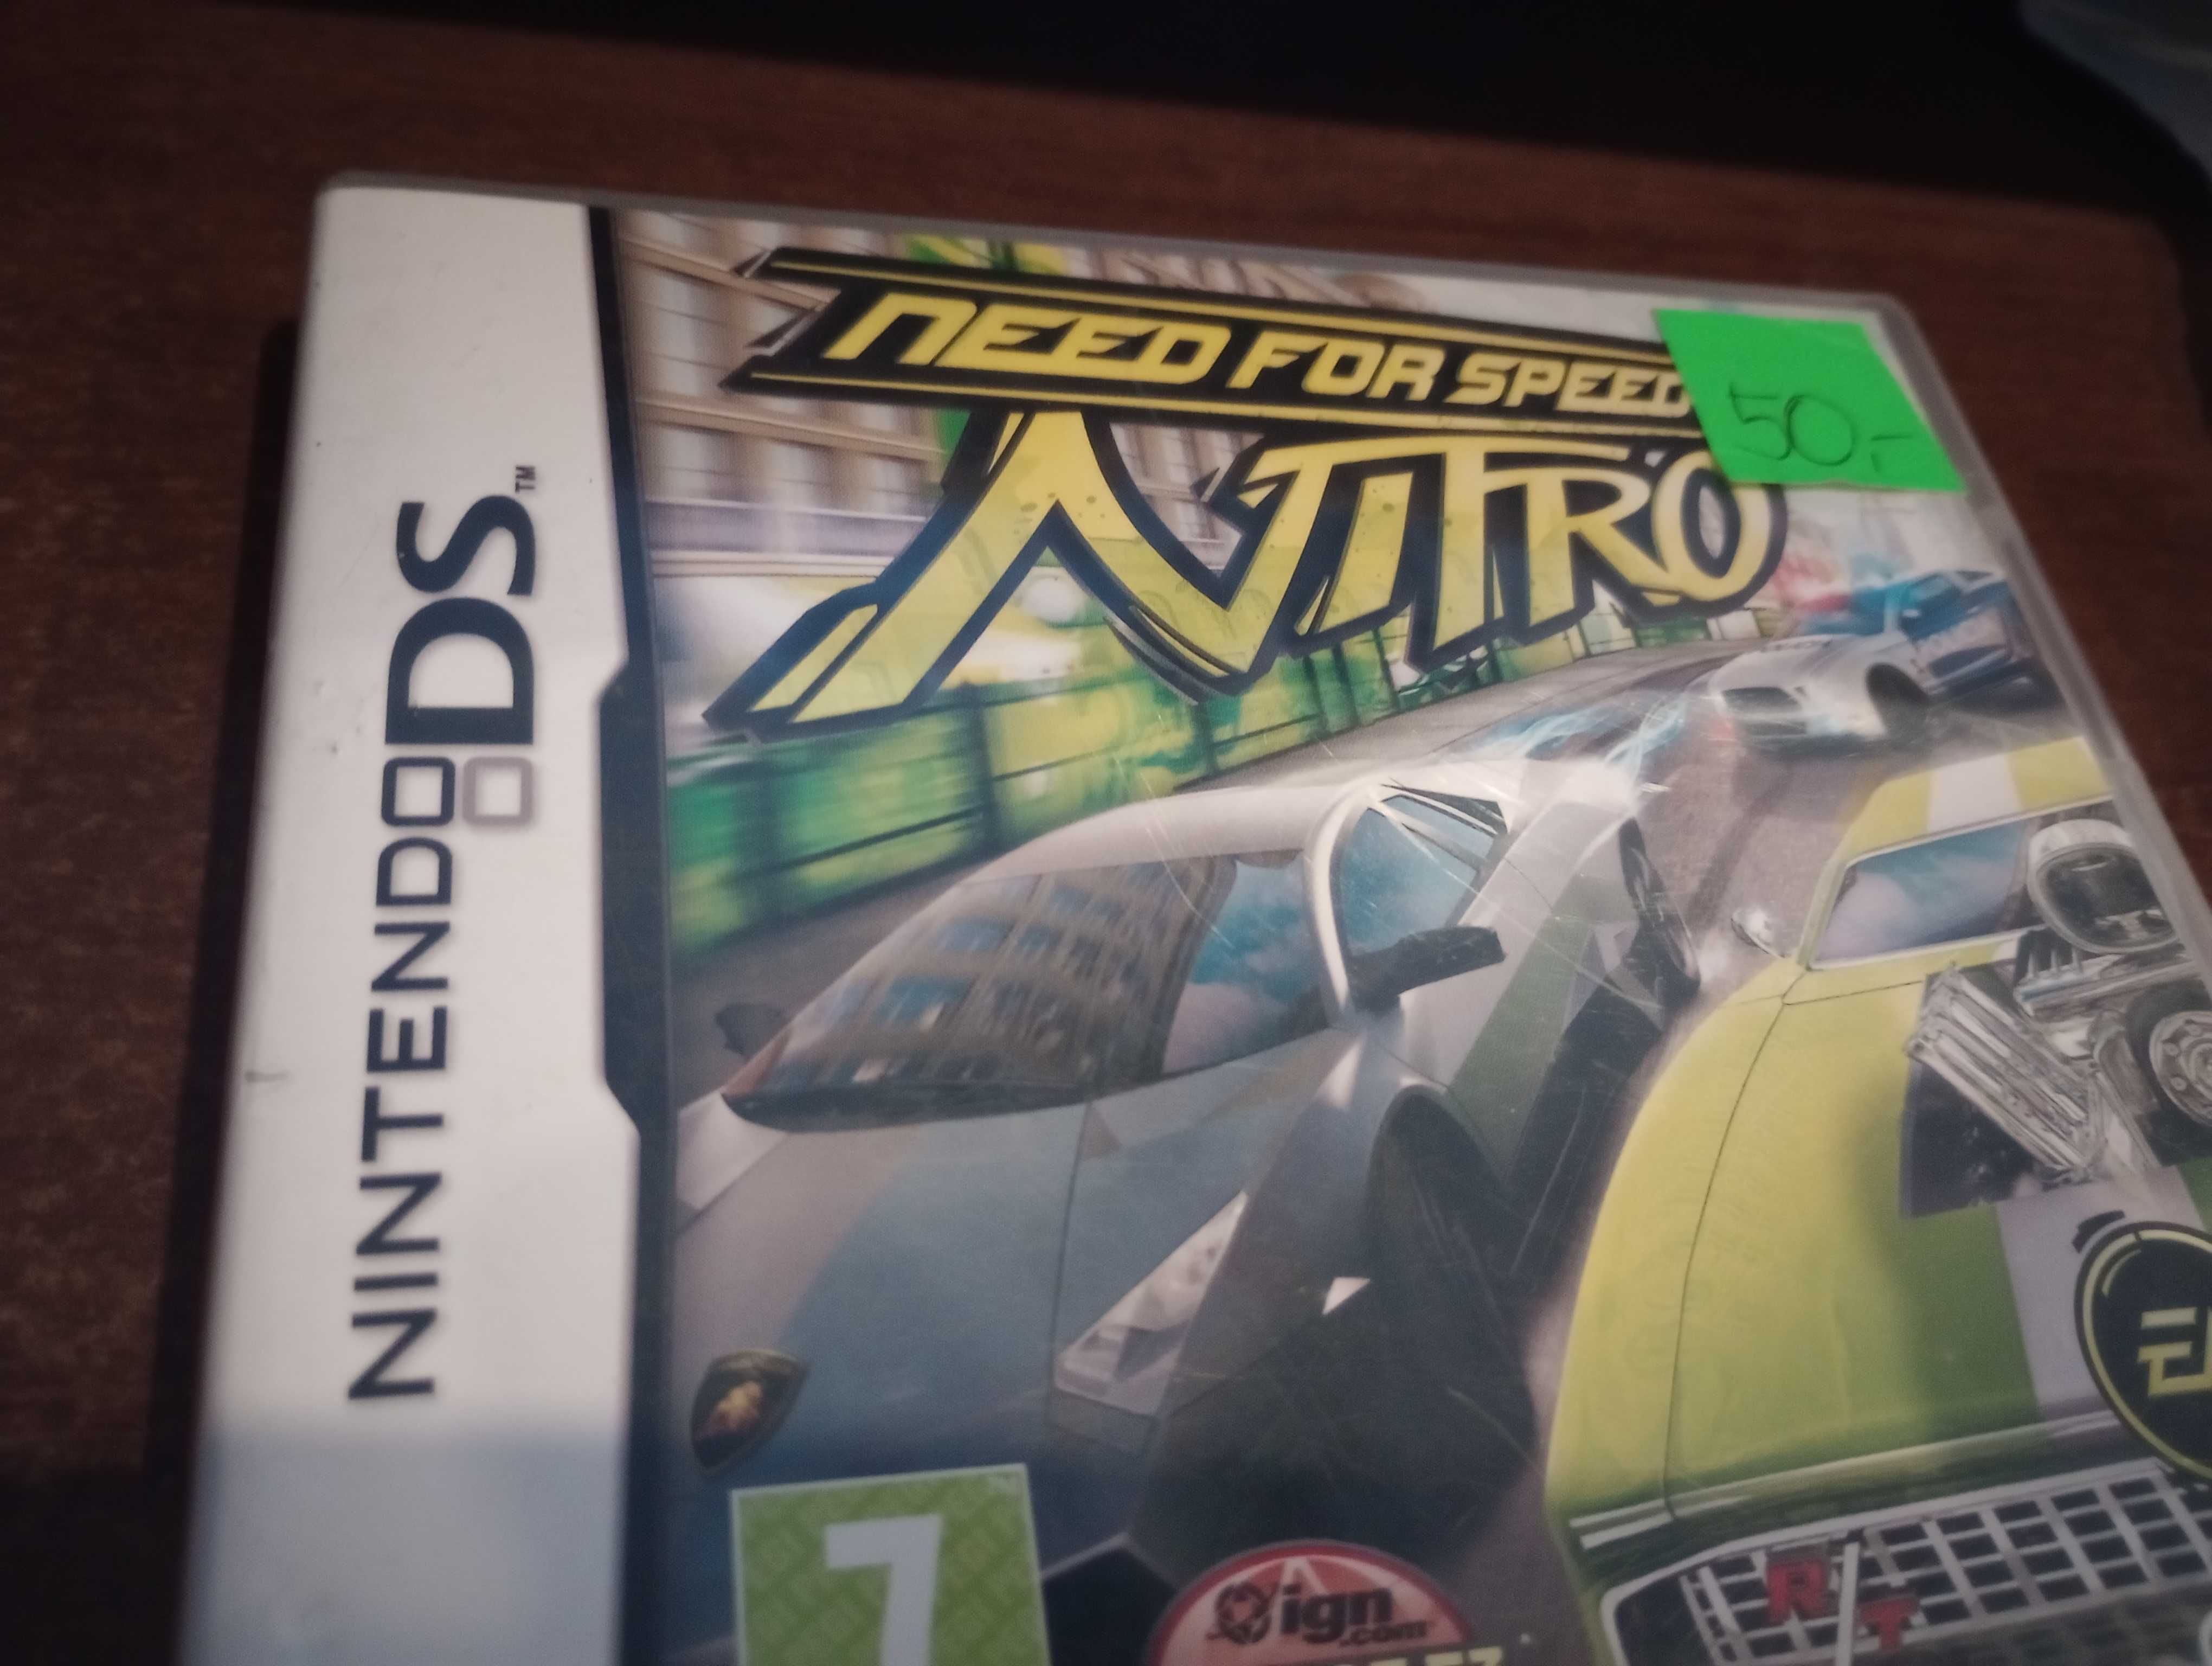 Nintendo DS Need for speed Nitro